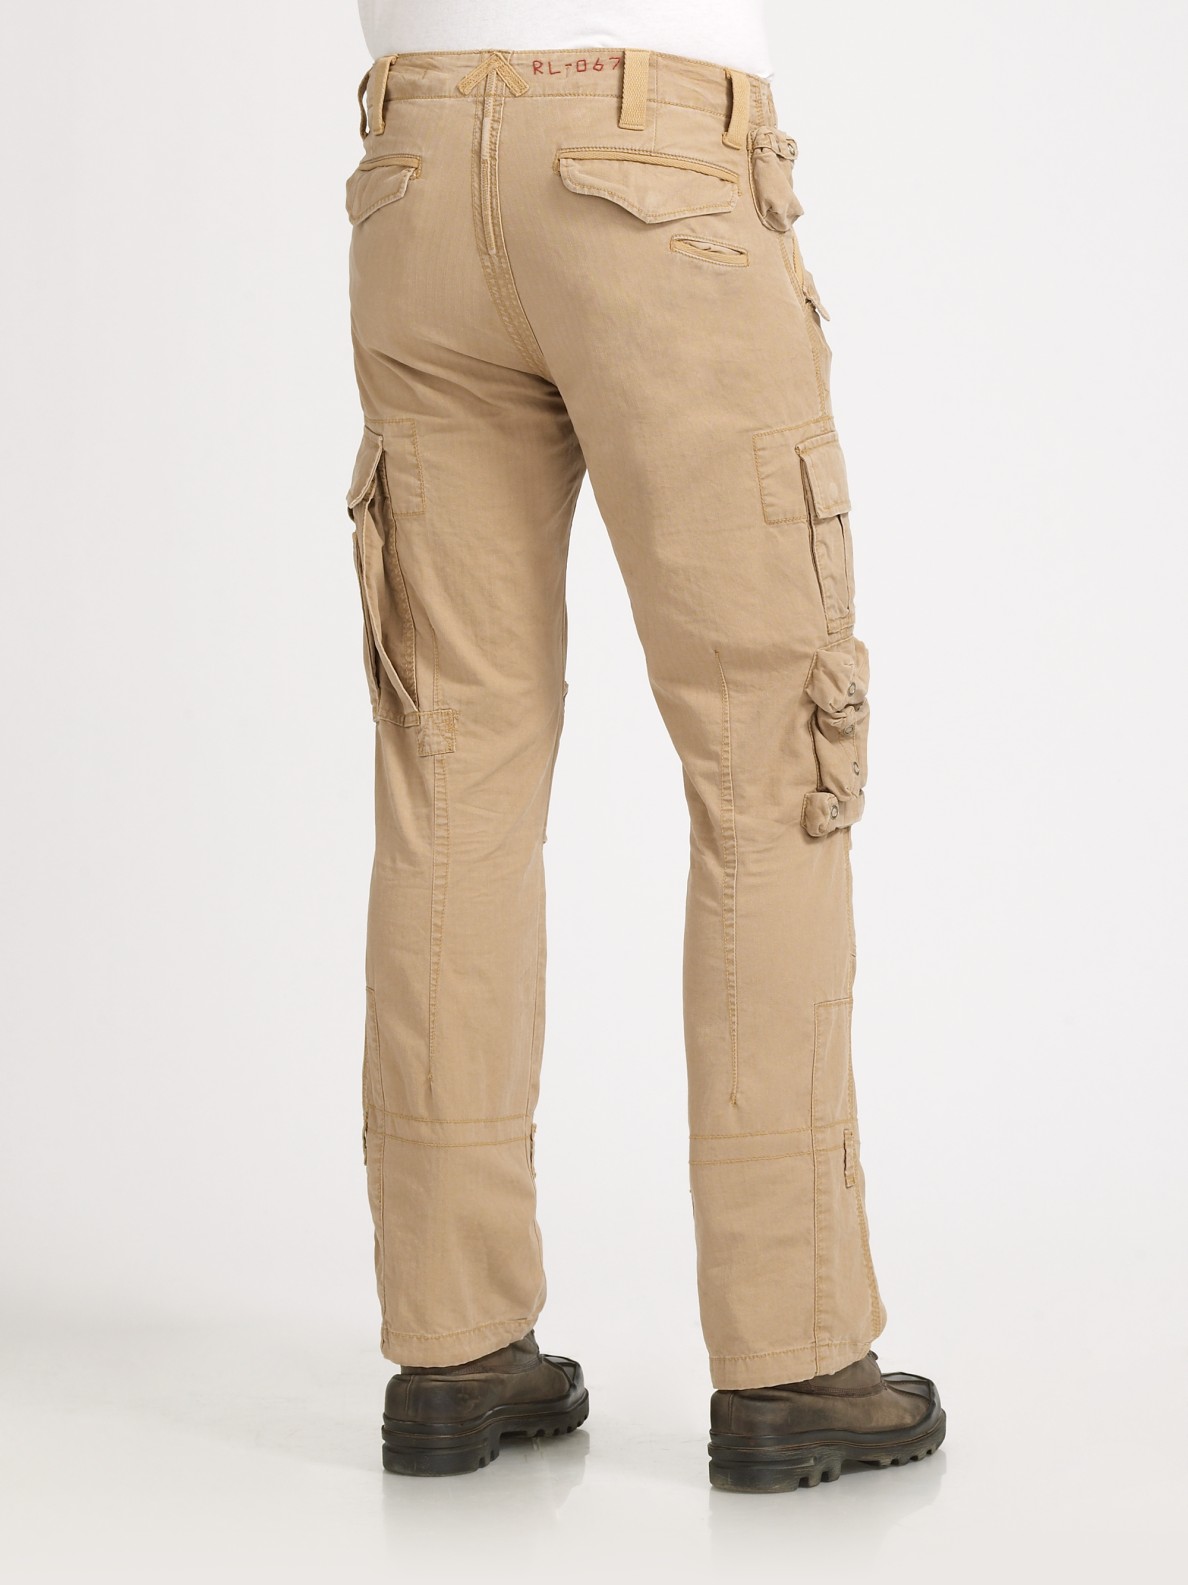 polo ralph lauren mens khaki pants - Dr. E. Horn GmbH - Dr. E. Horn GmbH